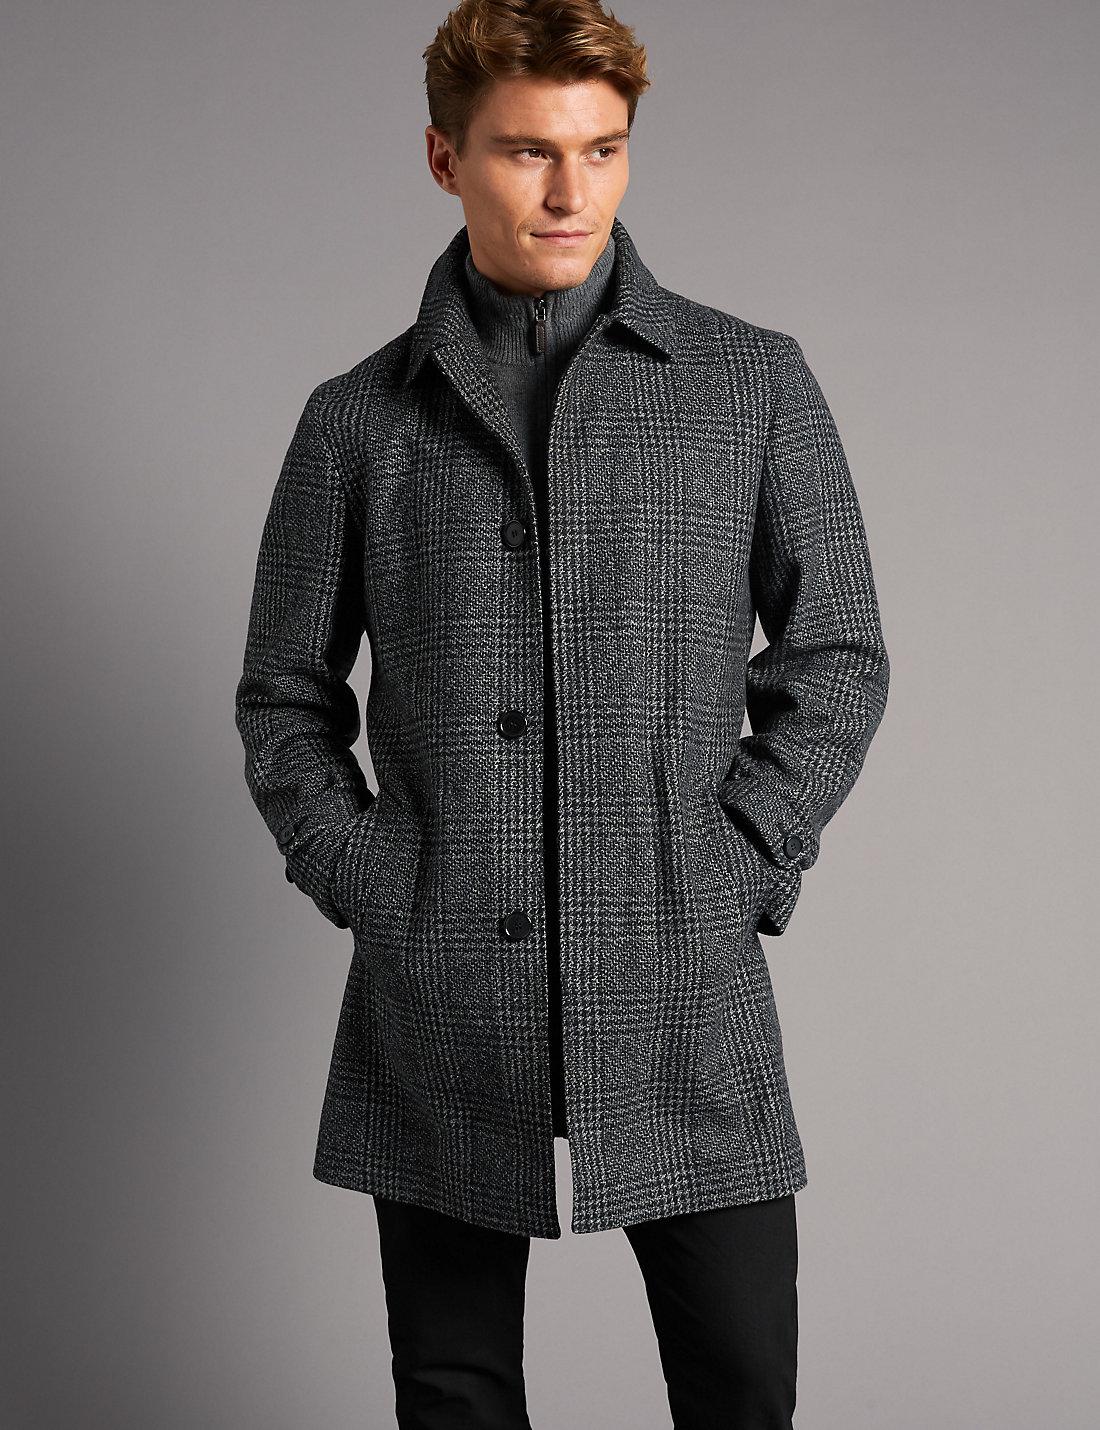 Lyst - Marks & spencer Wool Blend Checked Coat in Black for Men